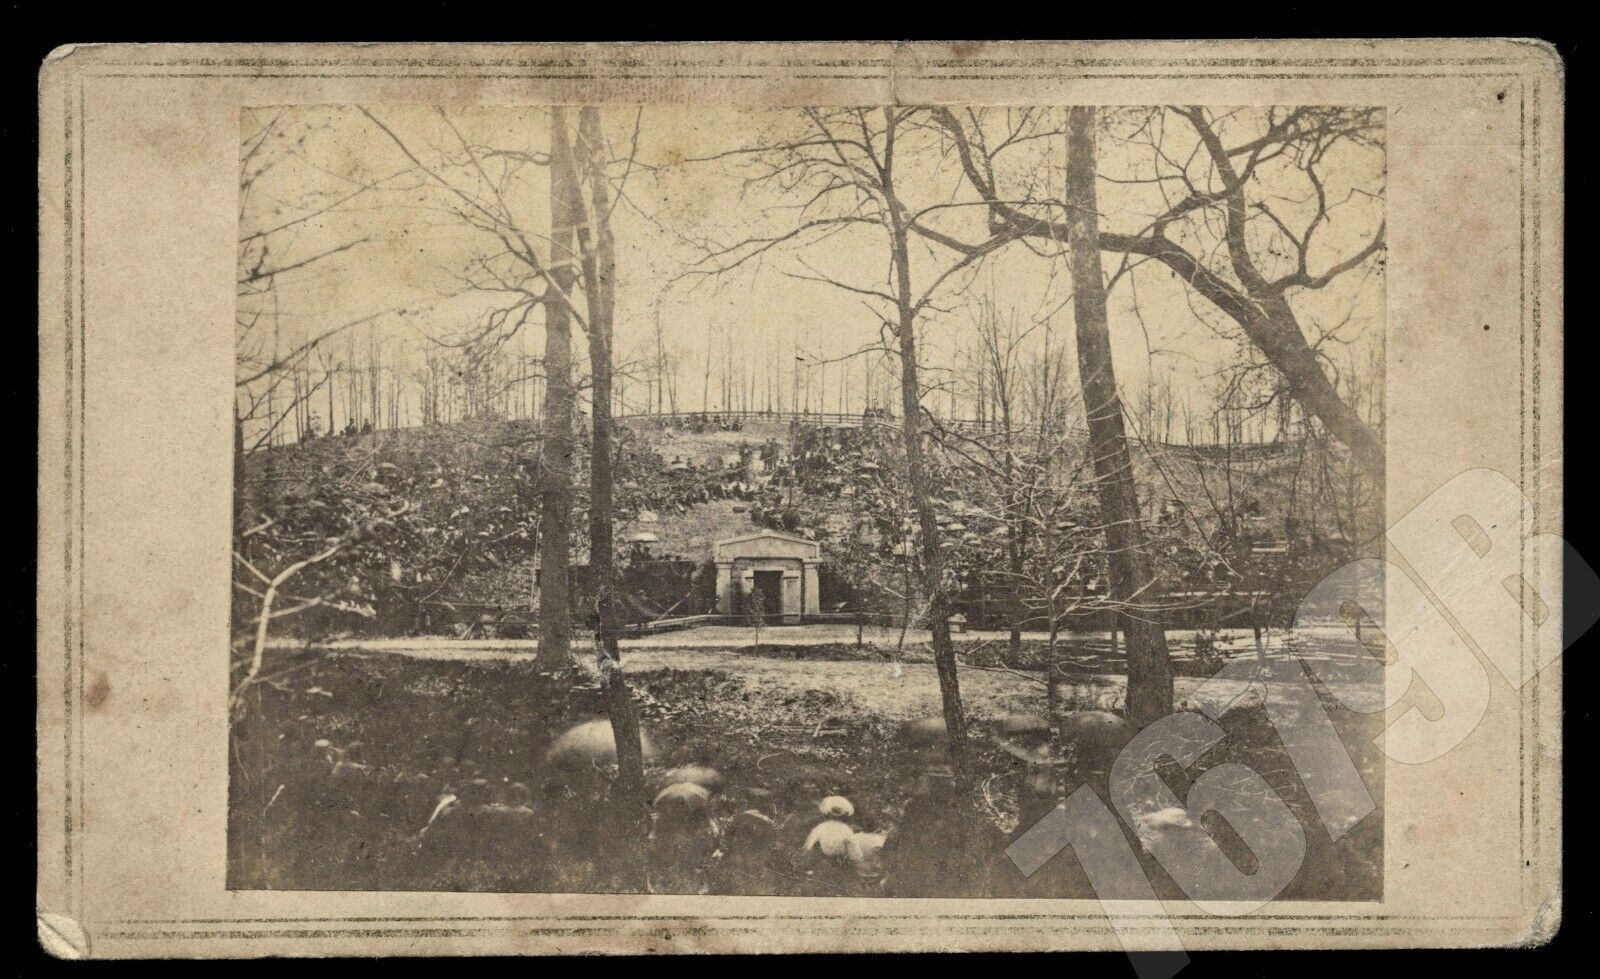 RARE CDV PHOTO OF ABRAHAM LINCOLN FIRST TOMB AT OAK RIDGE CEMETERY 1860s